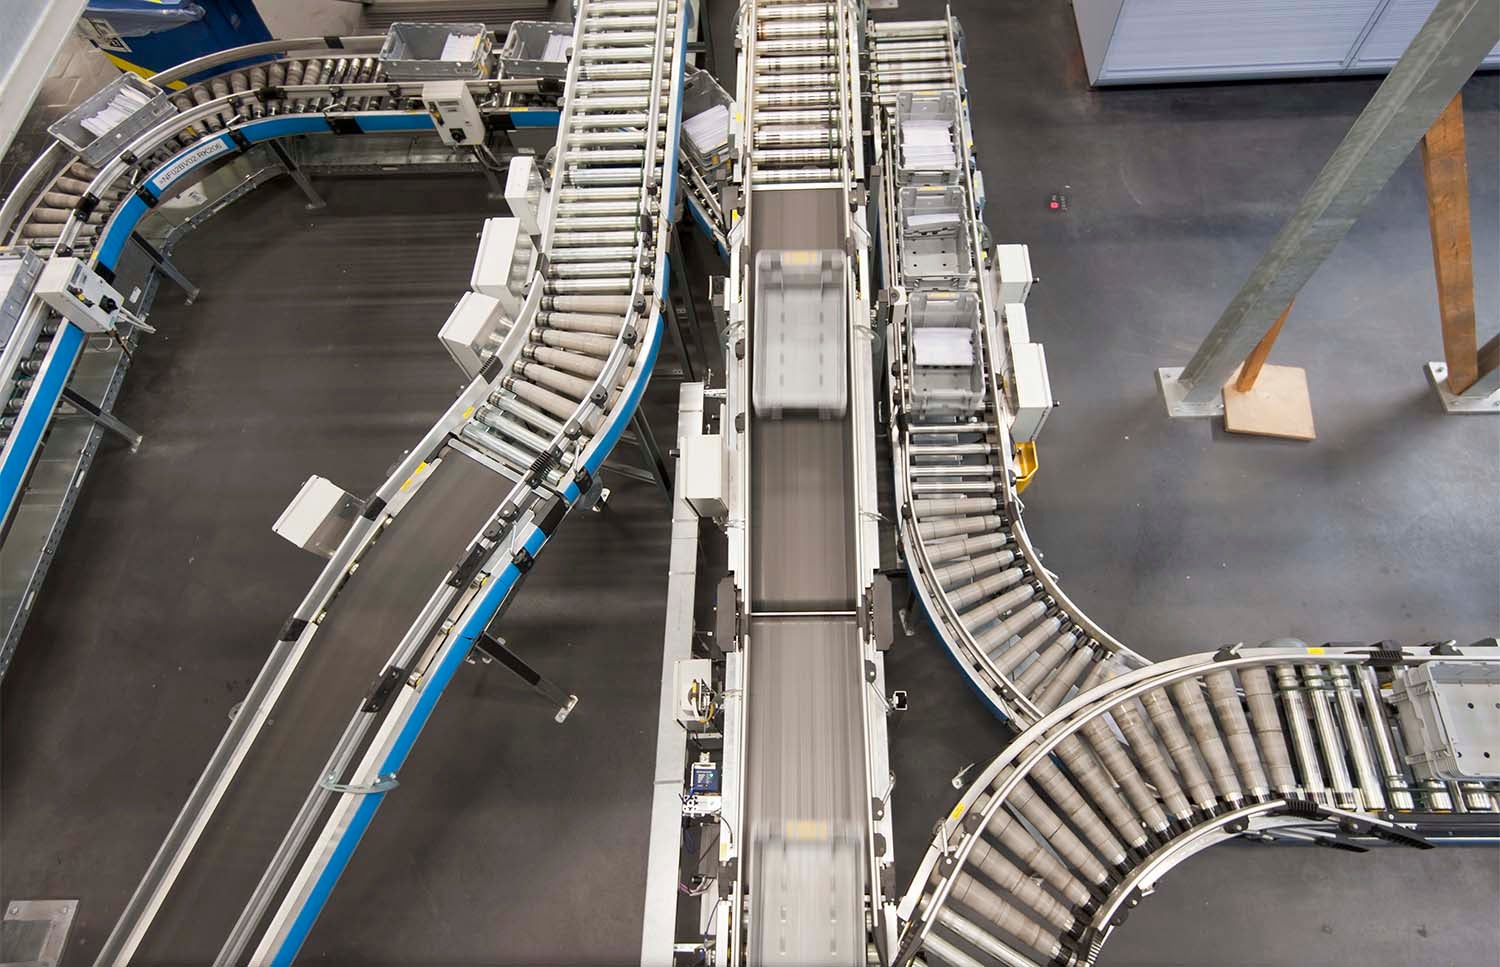 Overhead view of empty conveyor belts in a factory